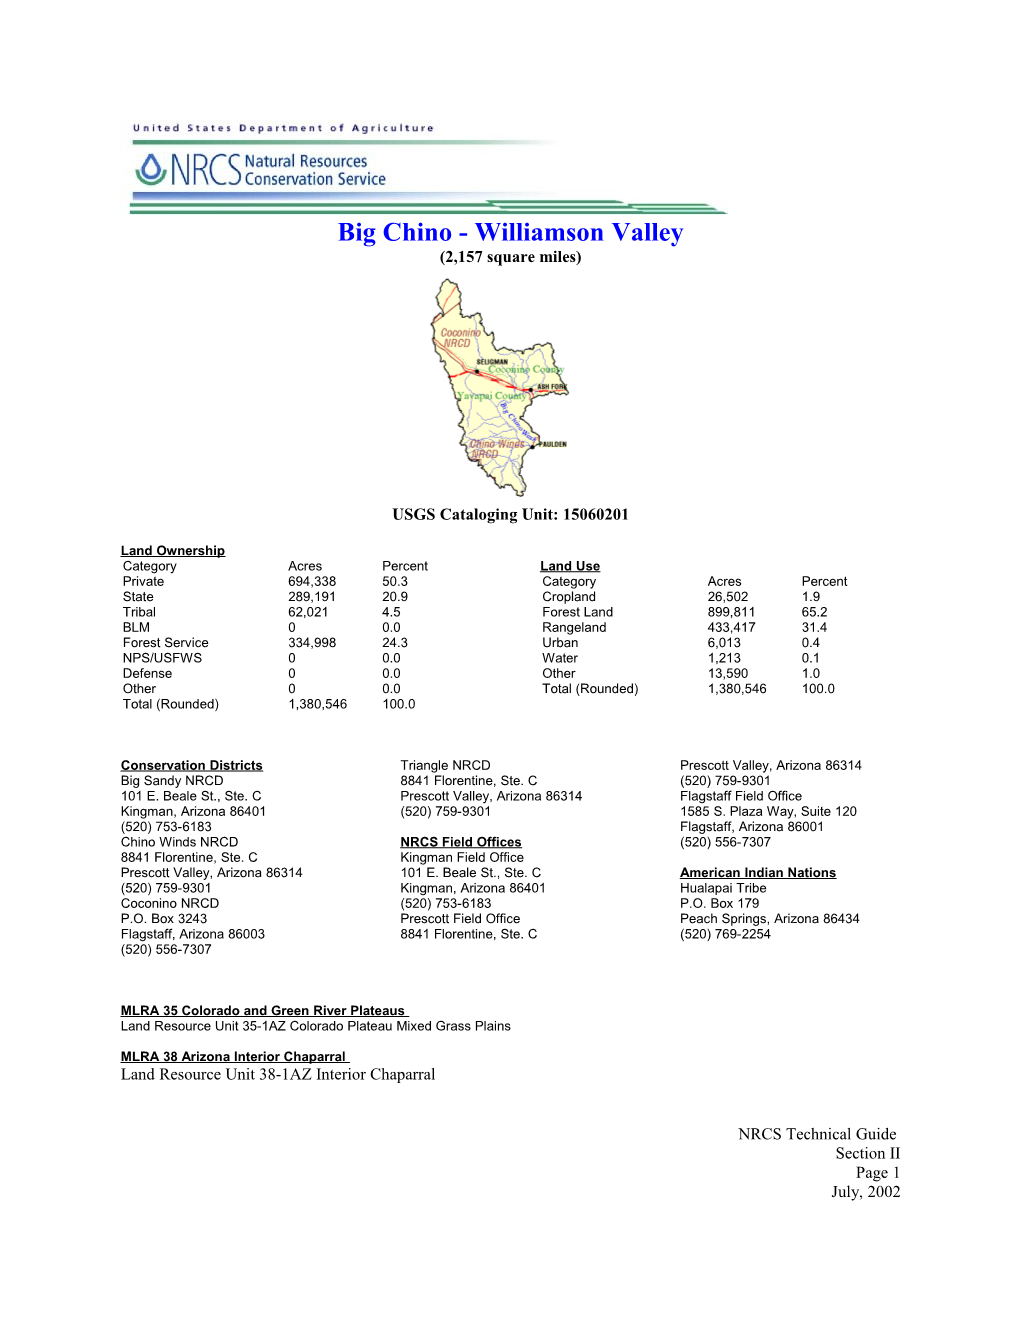 Big Chino - Williamson Valley